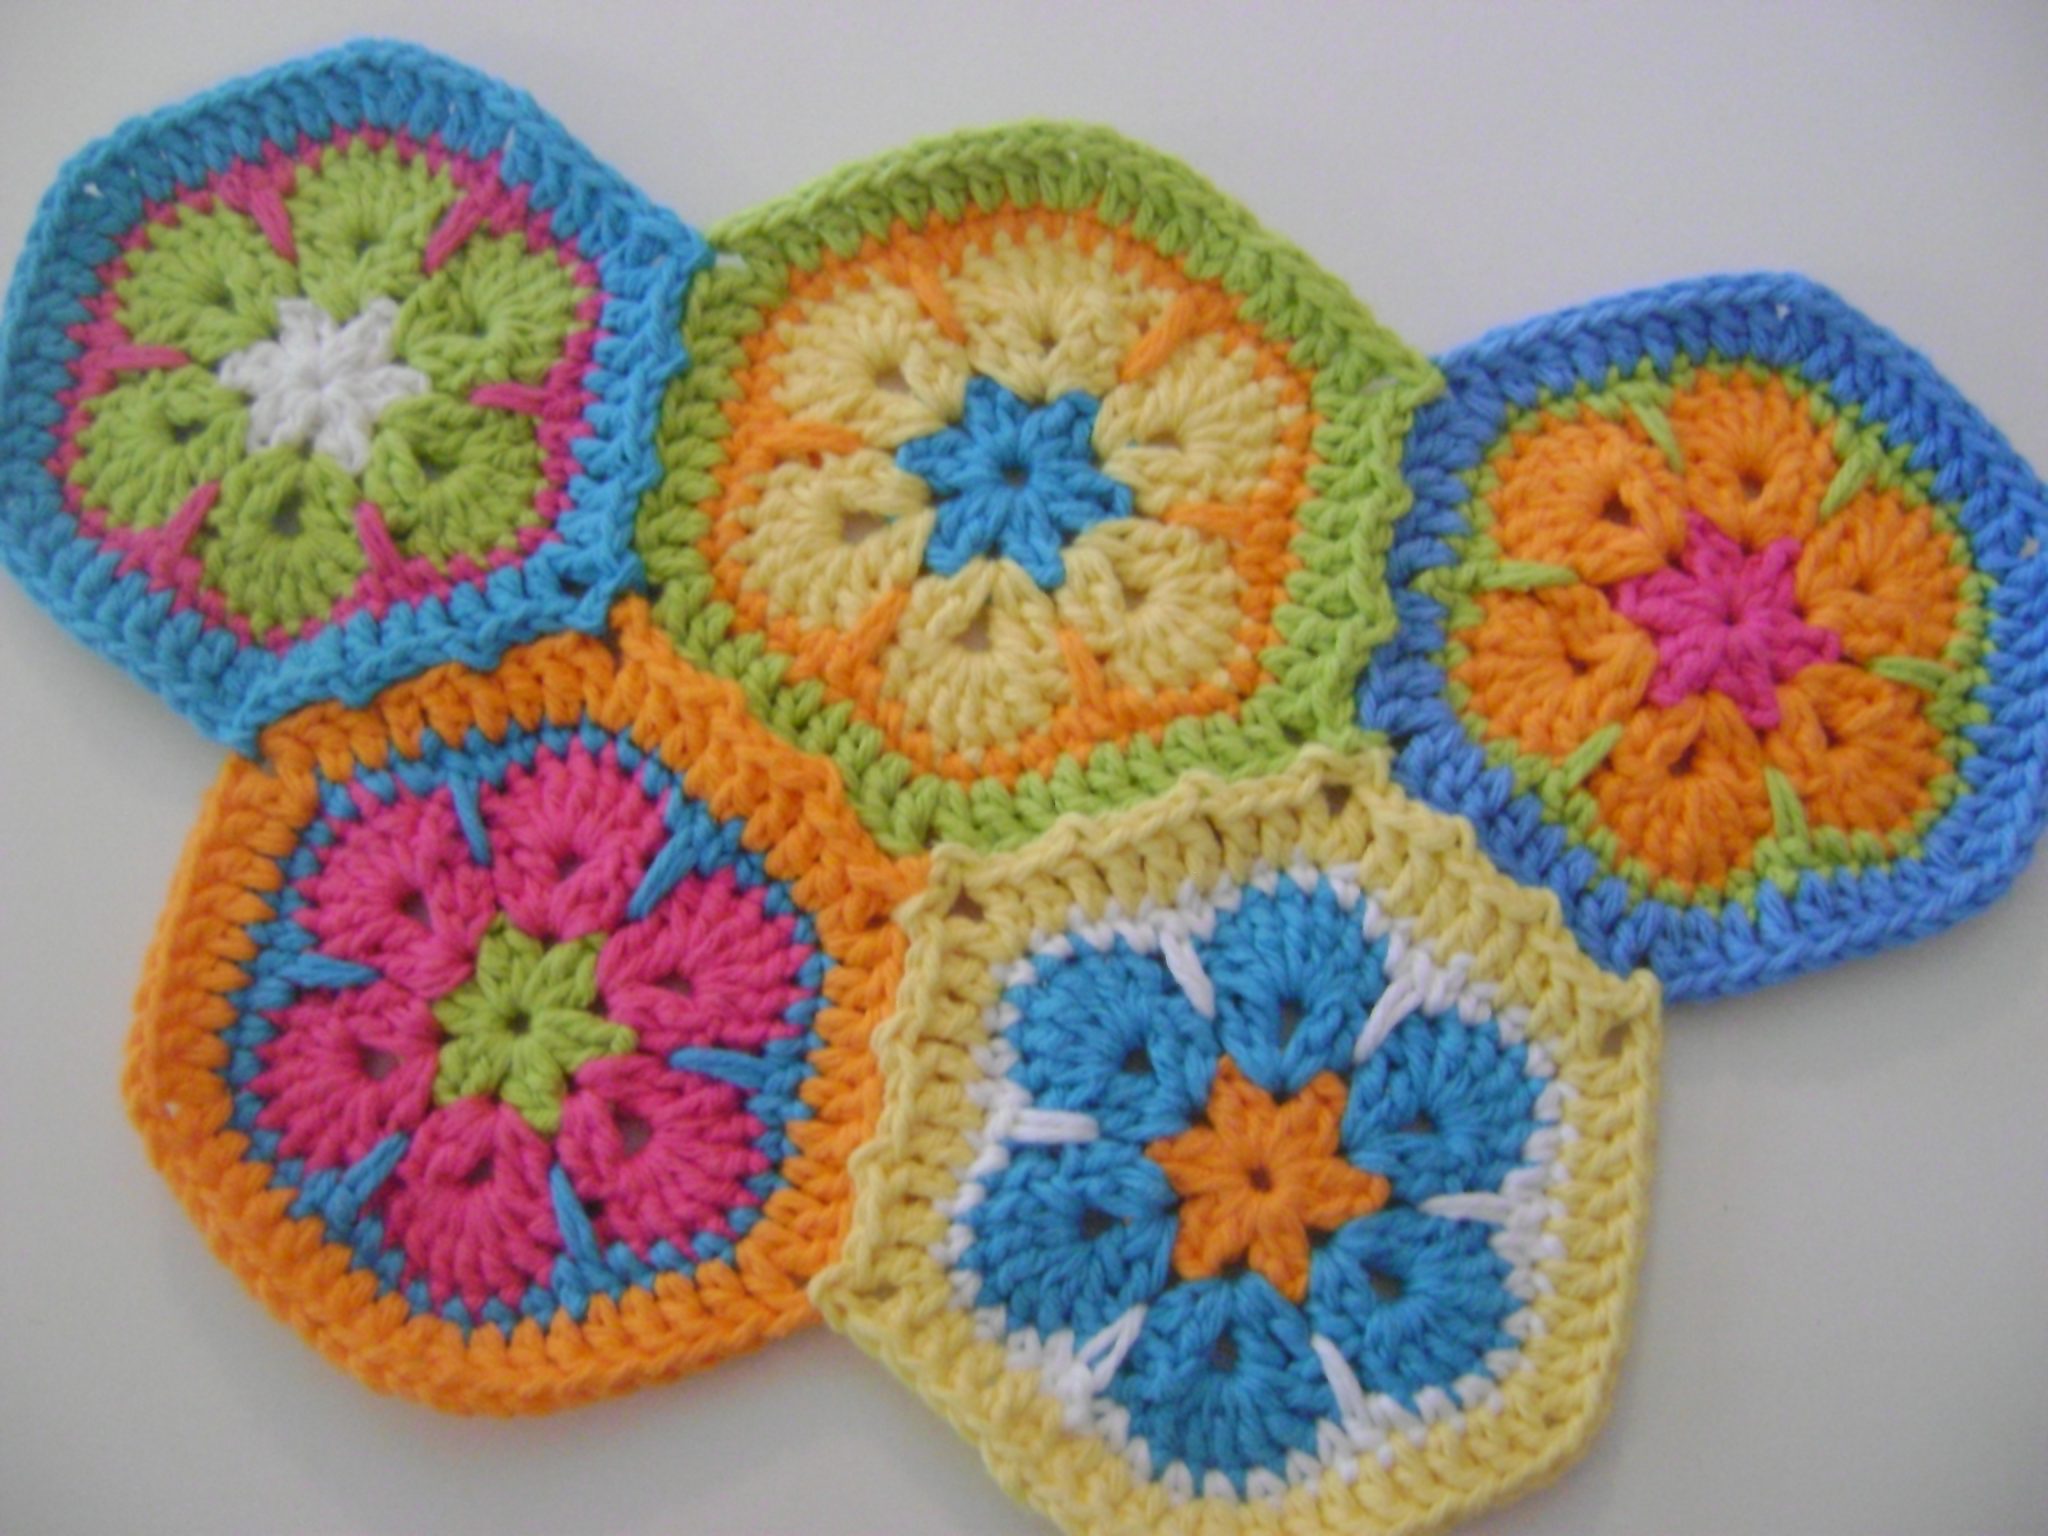 Crocheting the granny hexagon